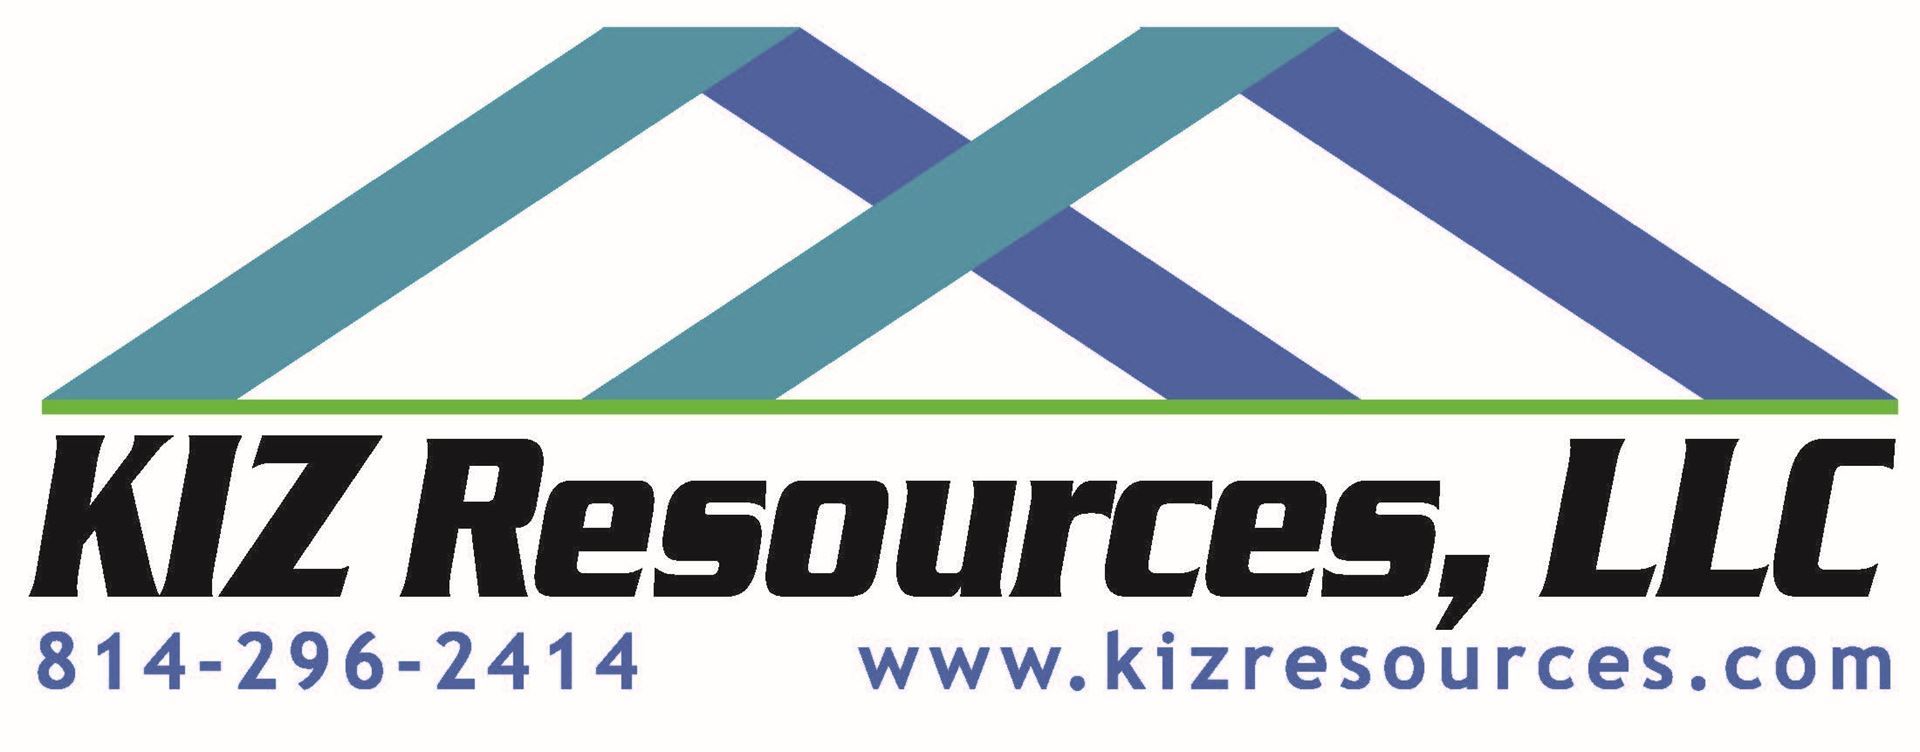 KIZ Resources LLC Logo